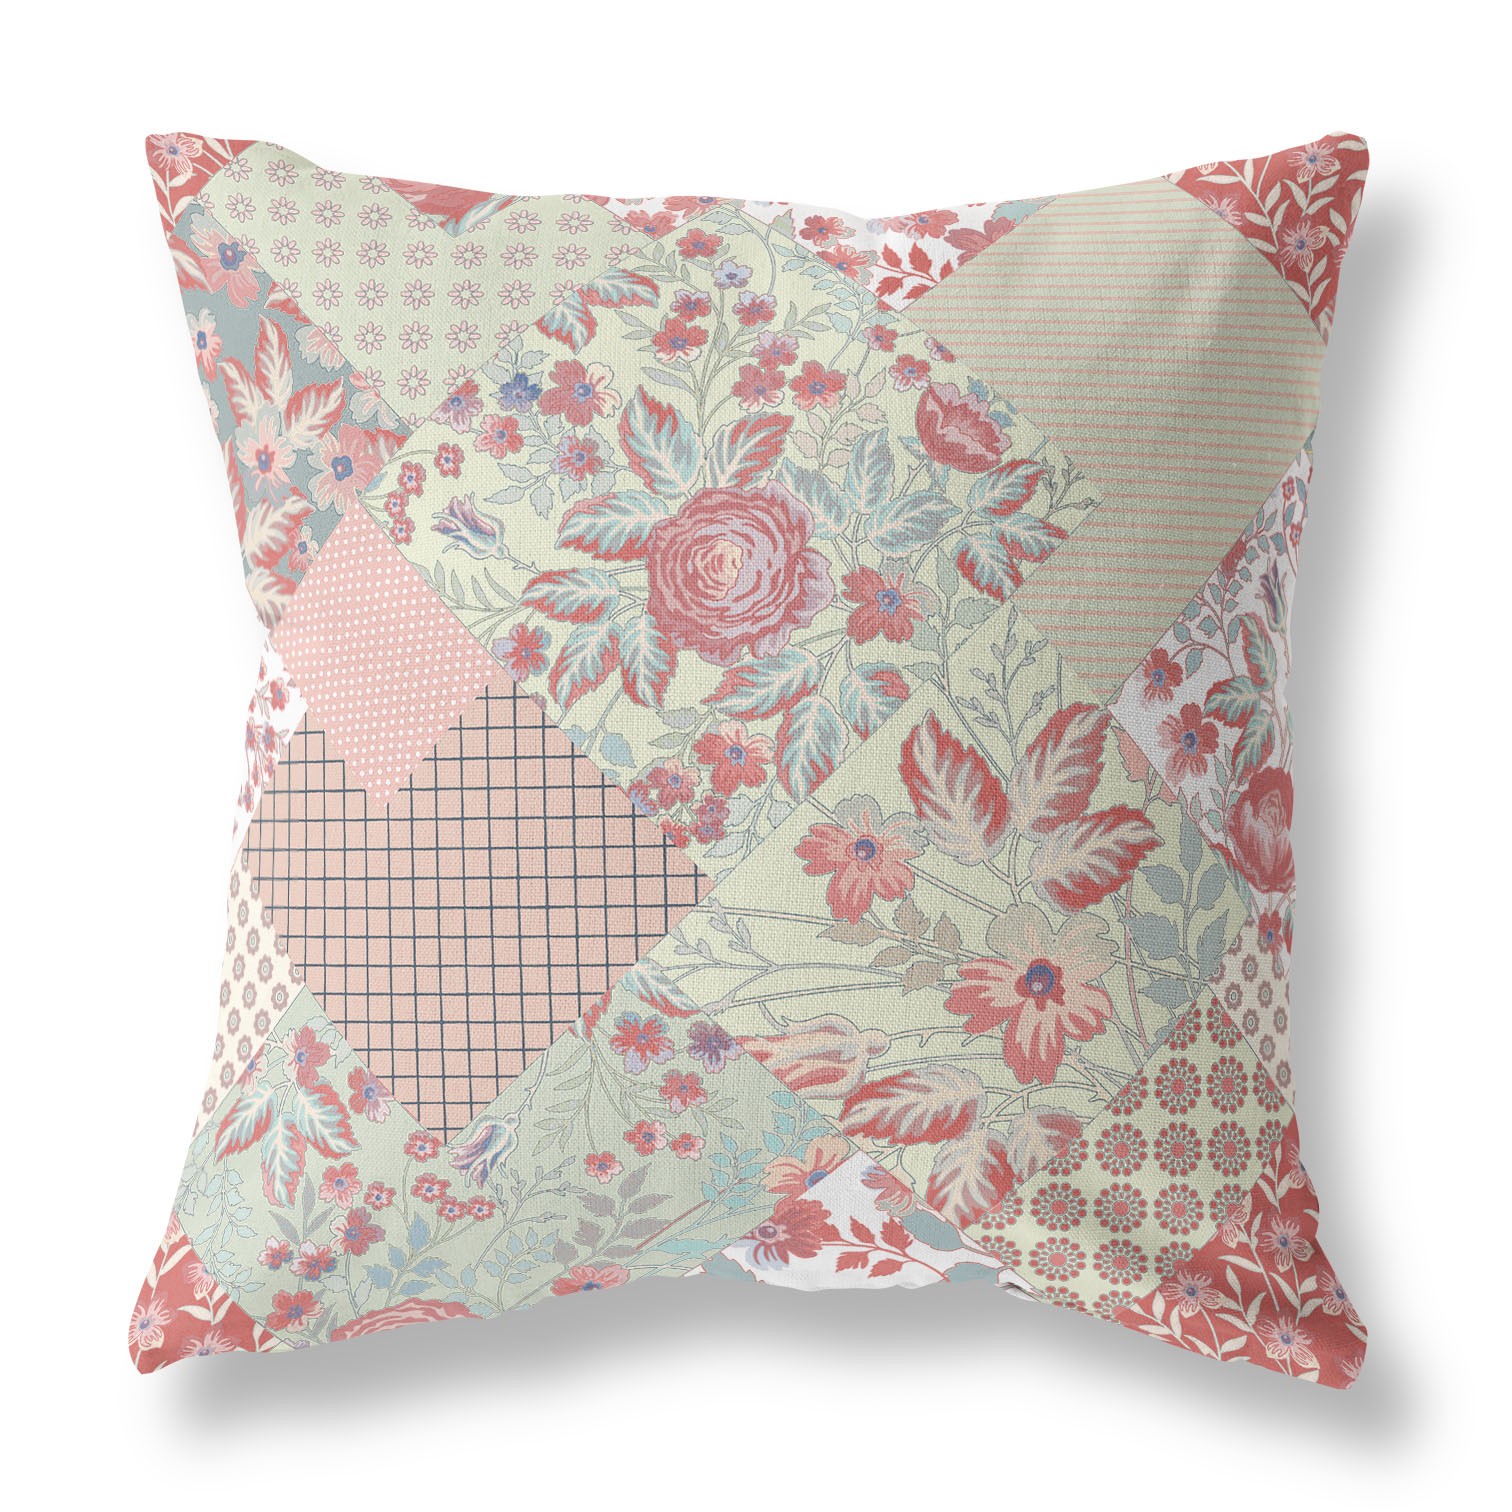 18" Peach Pink Floral Indoor Outdoor Throw Pillow-413896-1